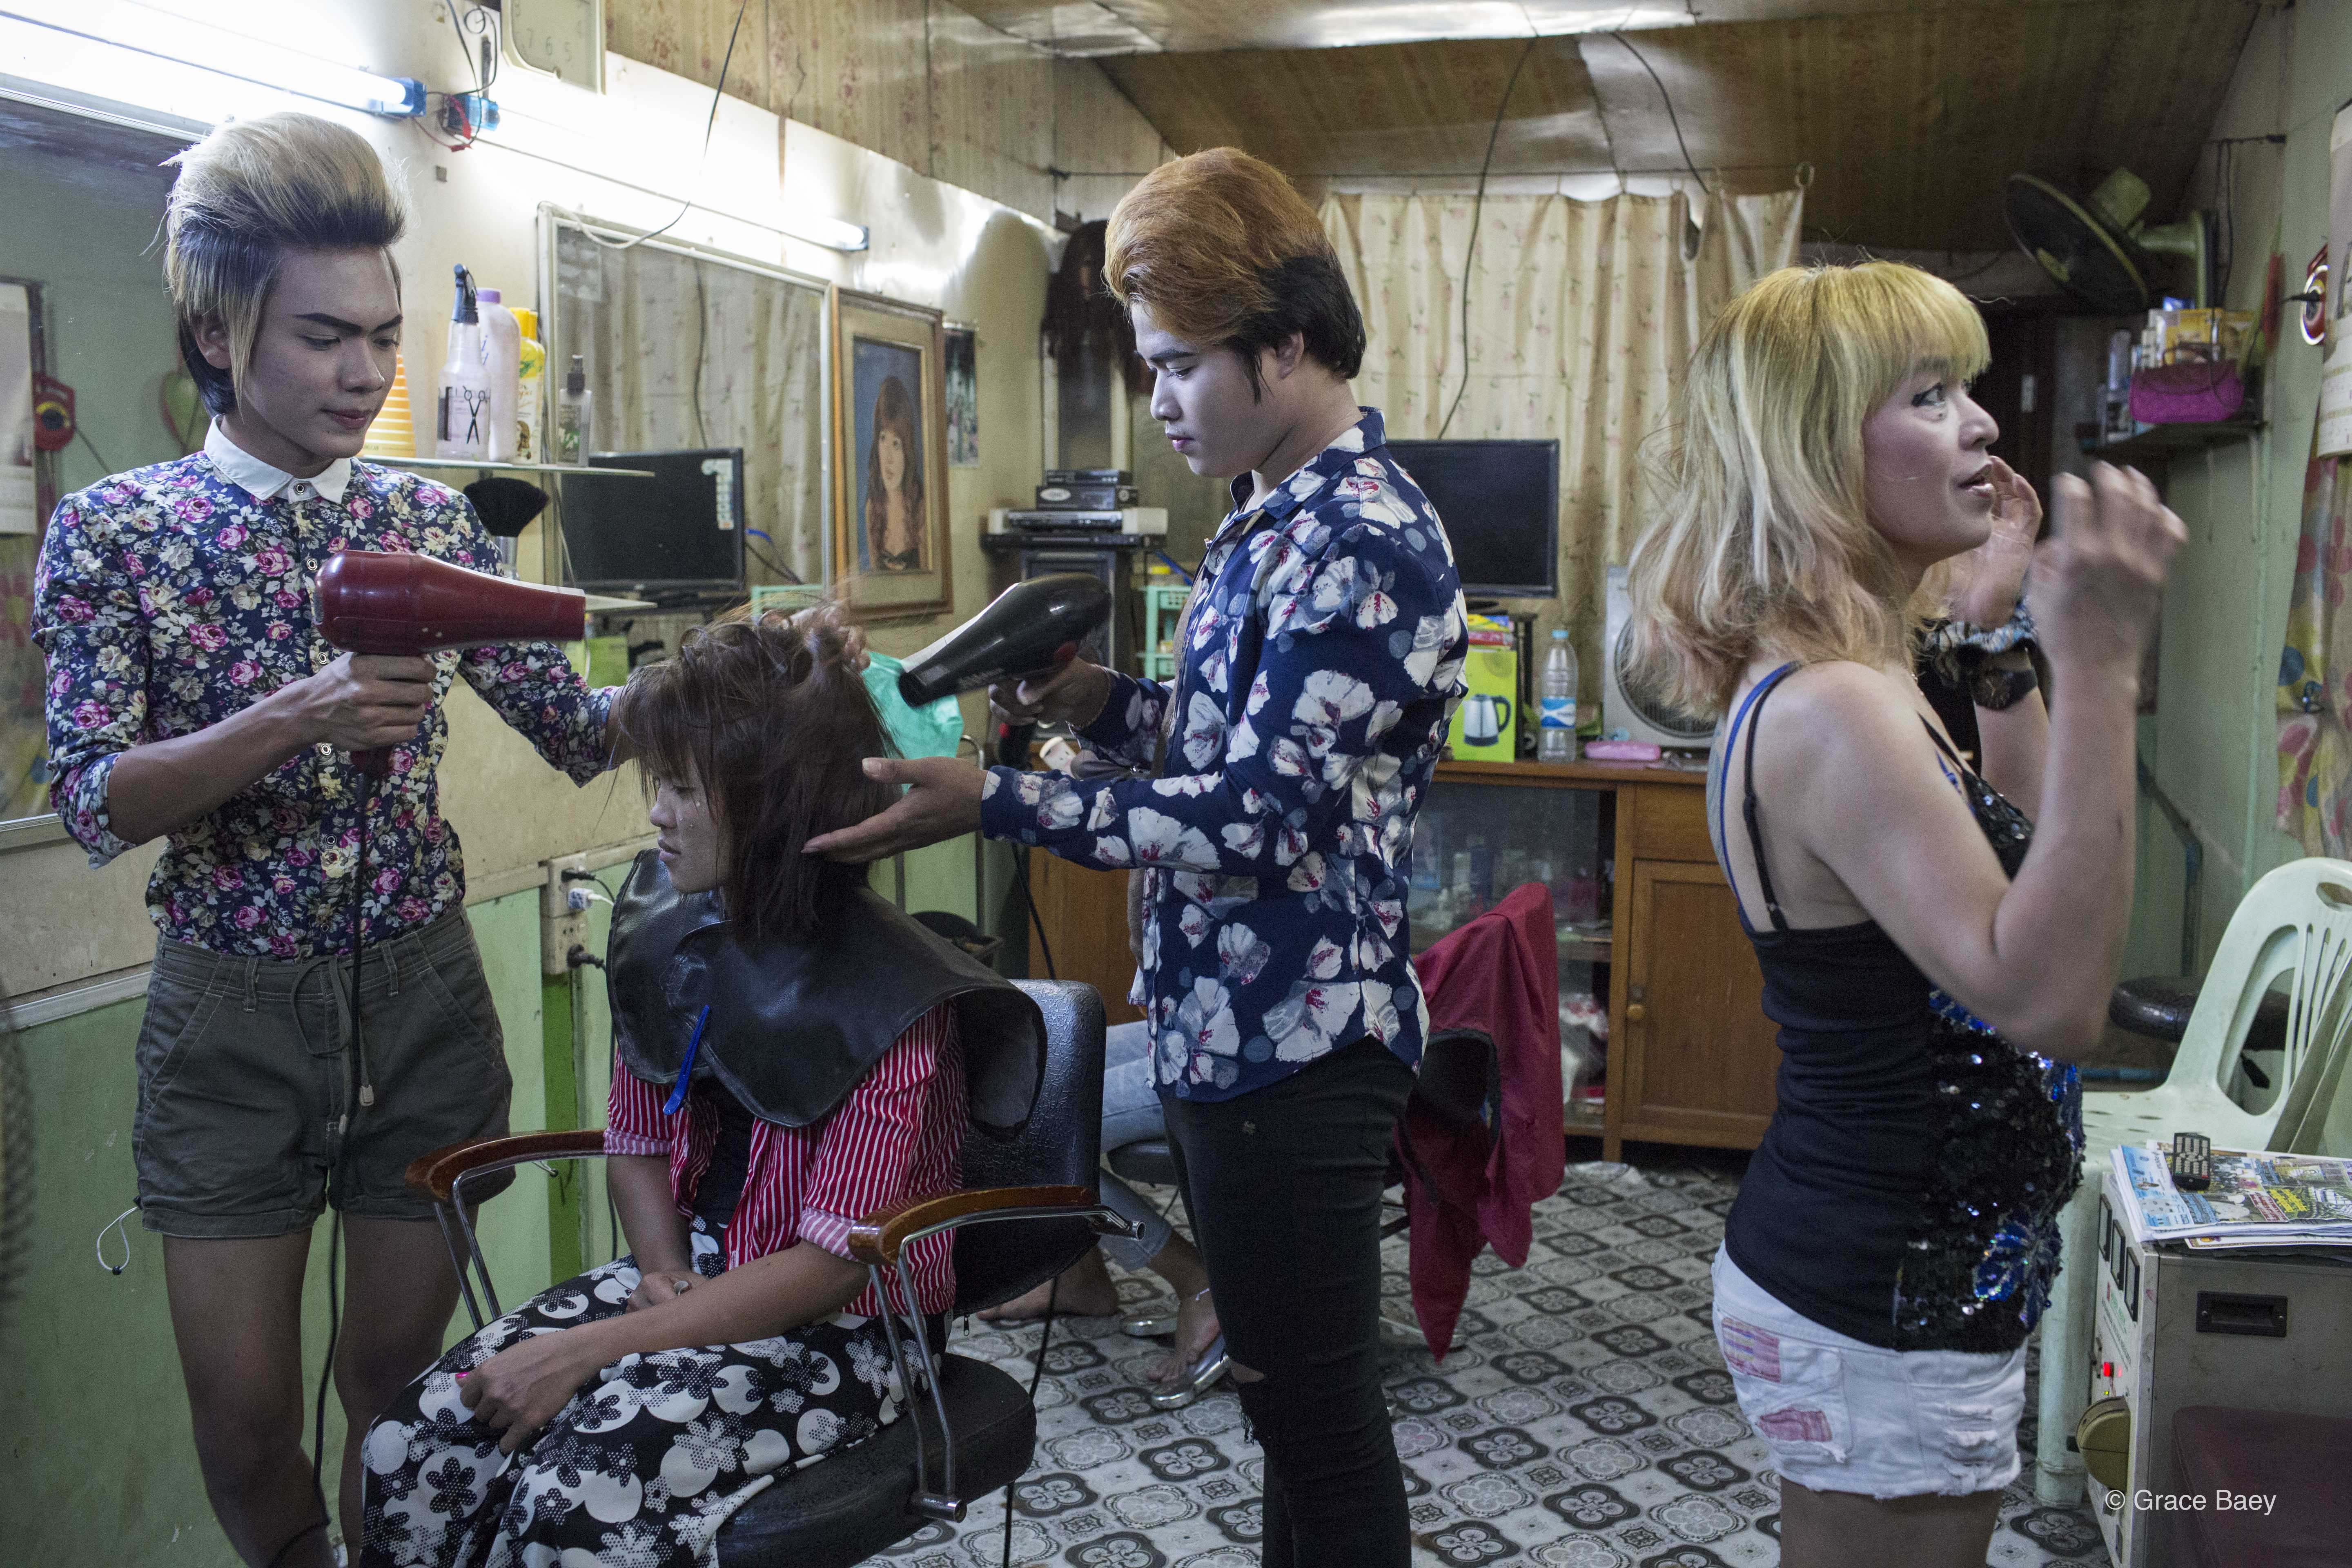 Htet Htet runs a beauty salon, which also serves as a safe space for LGBT youths. Photo: Grace Baey
